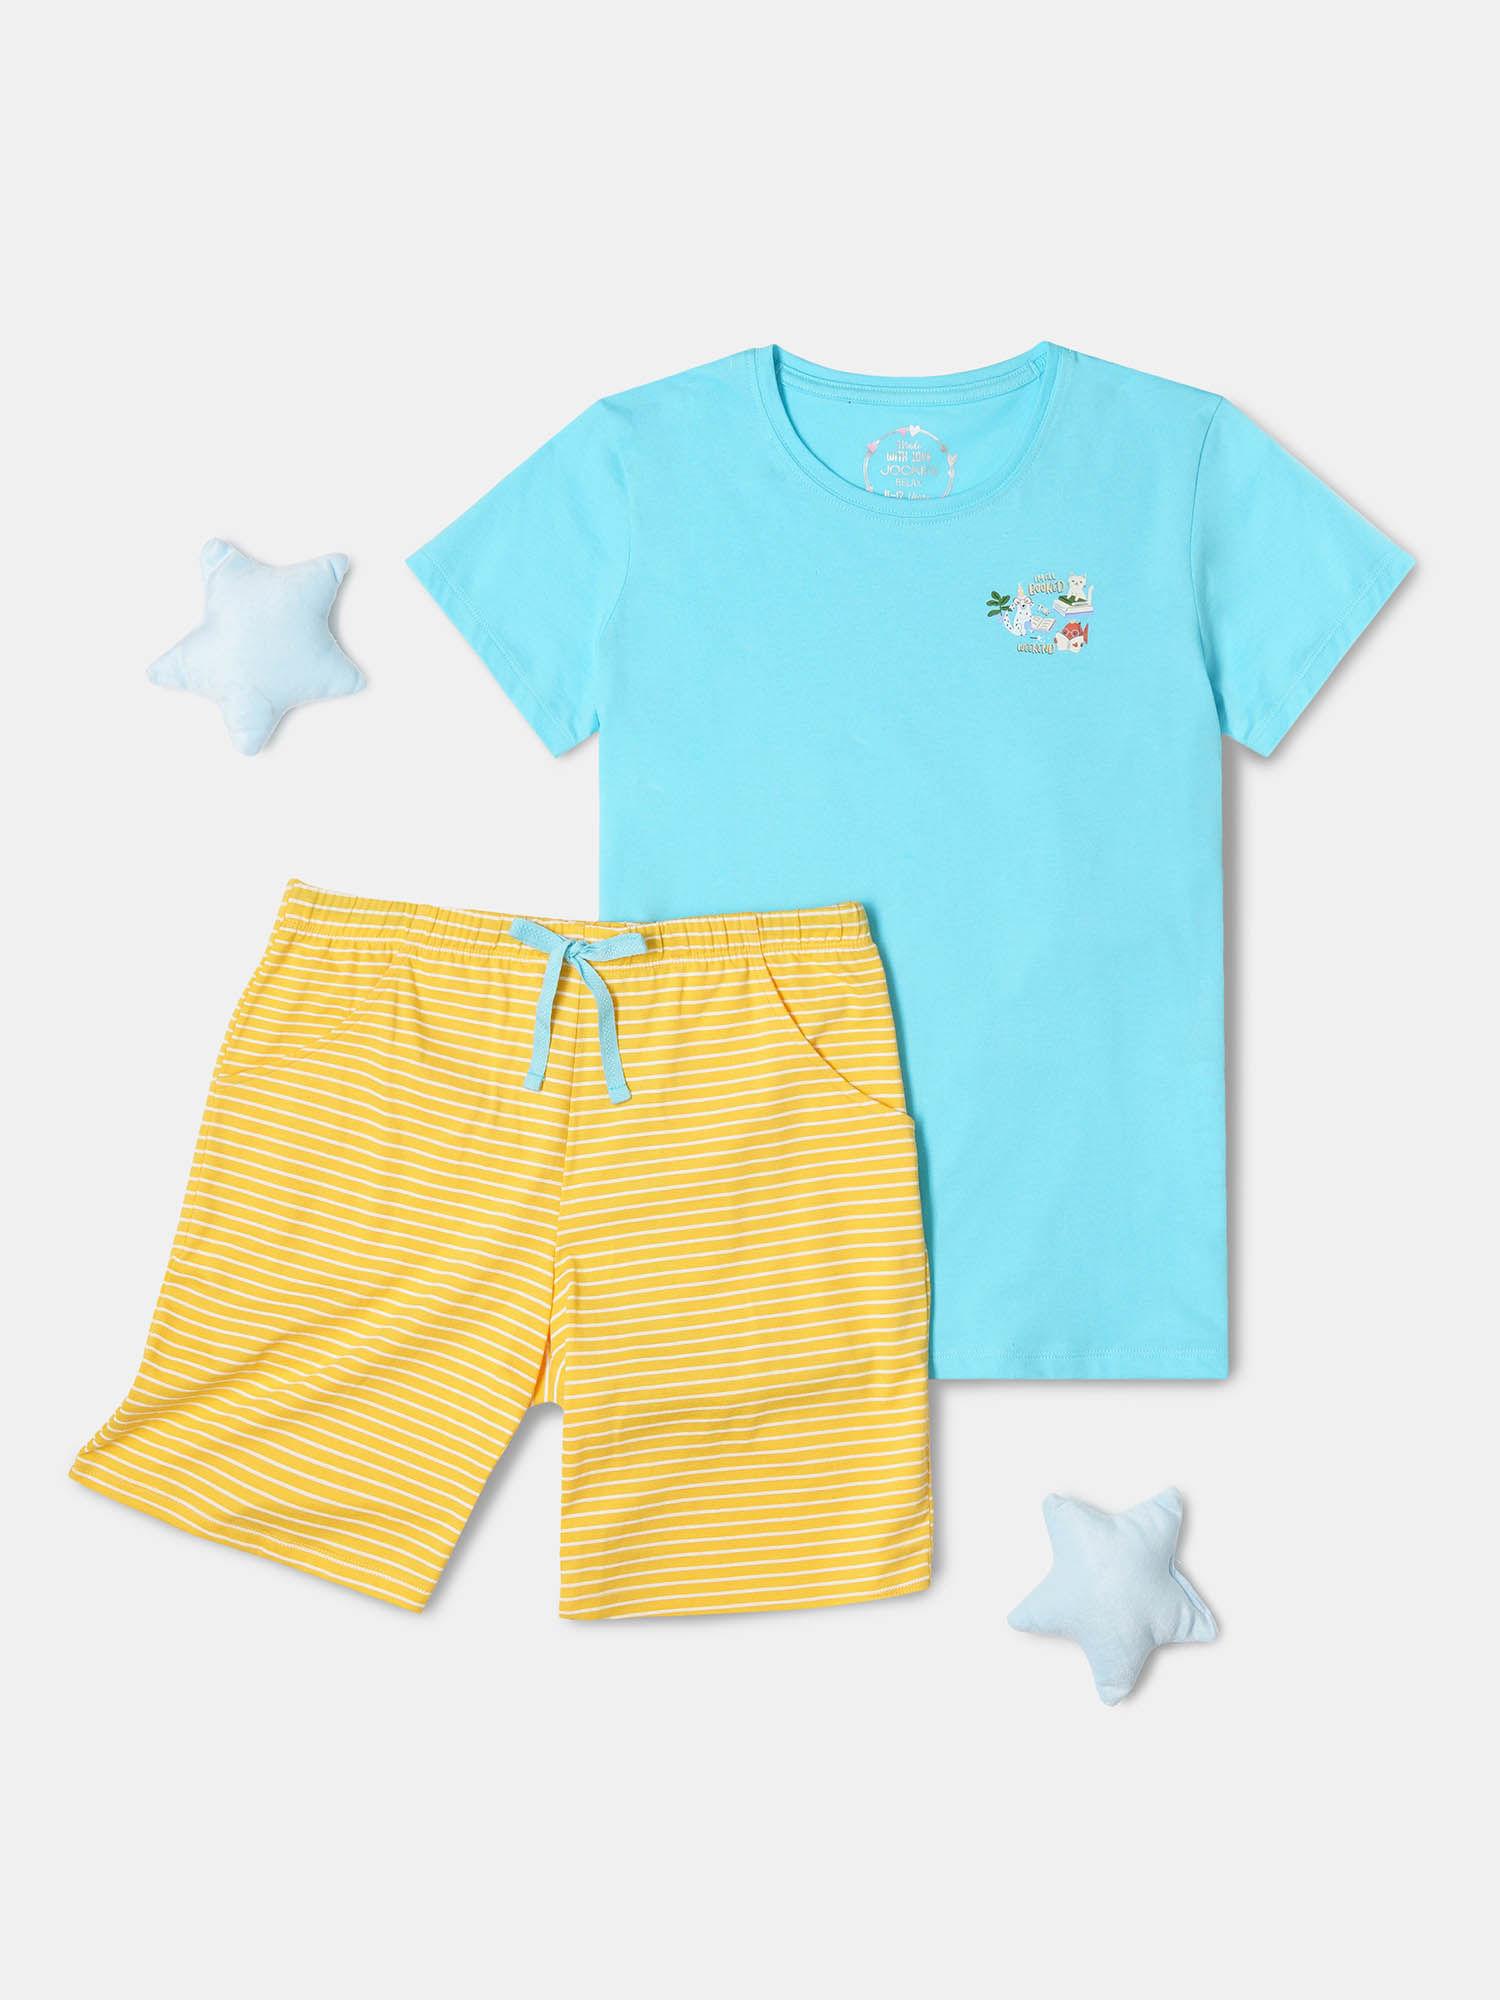 rg11 girl's cotton shorts & t-shirt spectra blue & yellow (set of 2)